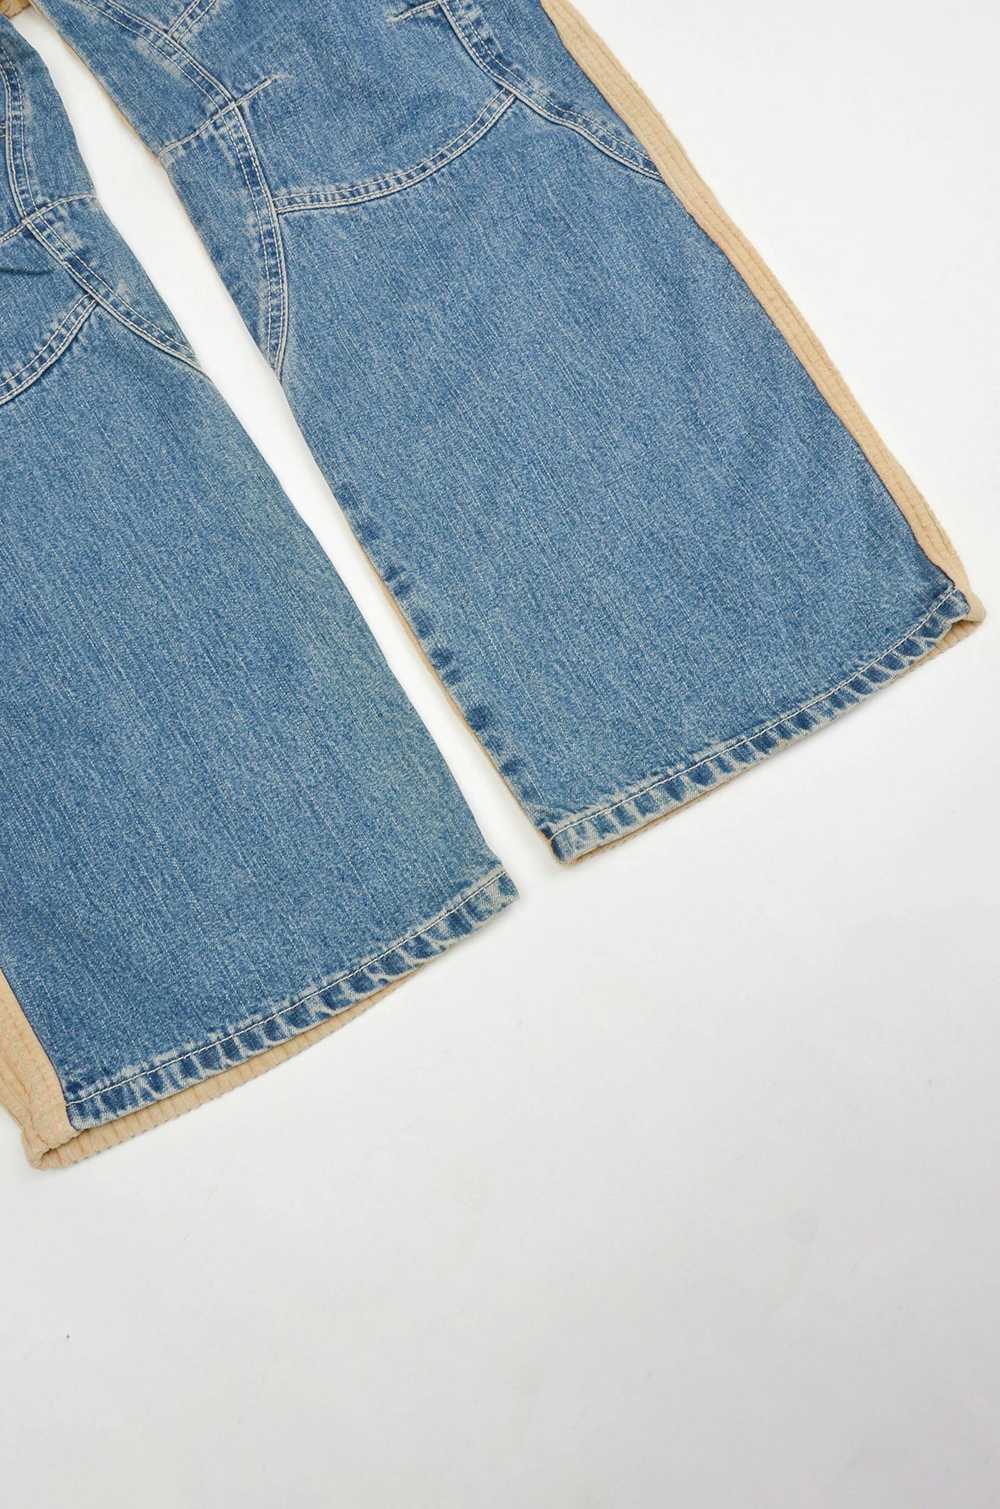 Jet Lag JET LAG Vintage Half Corduroy Jeans - image 12